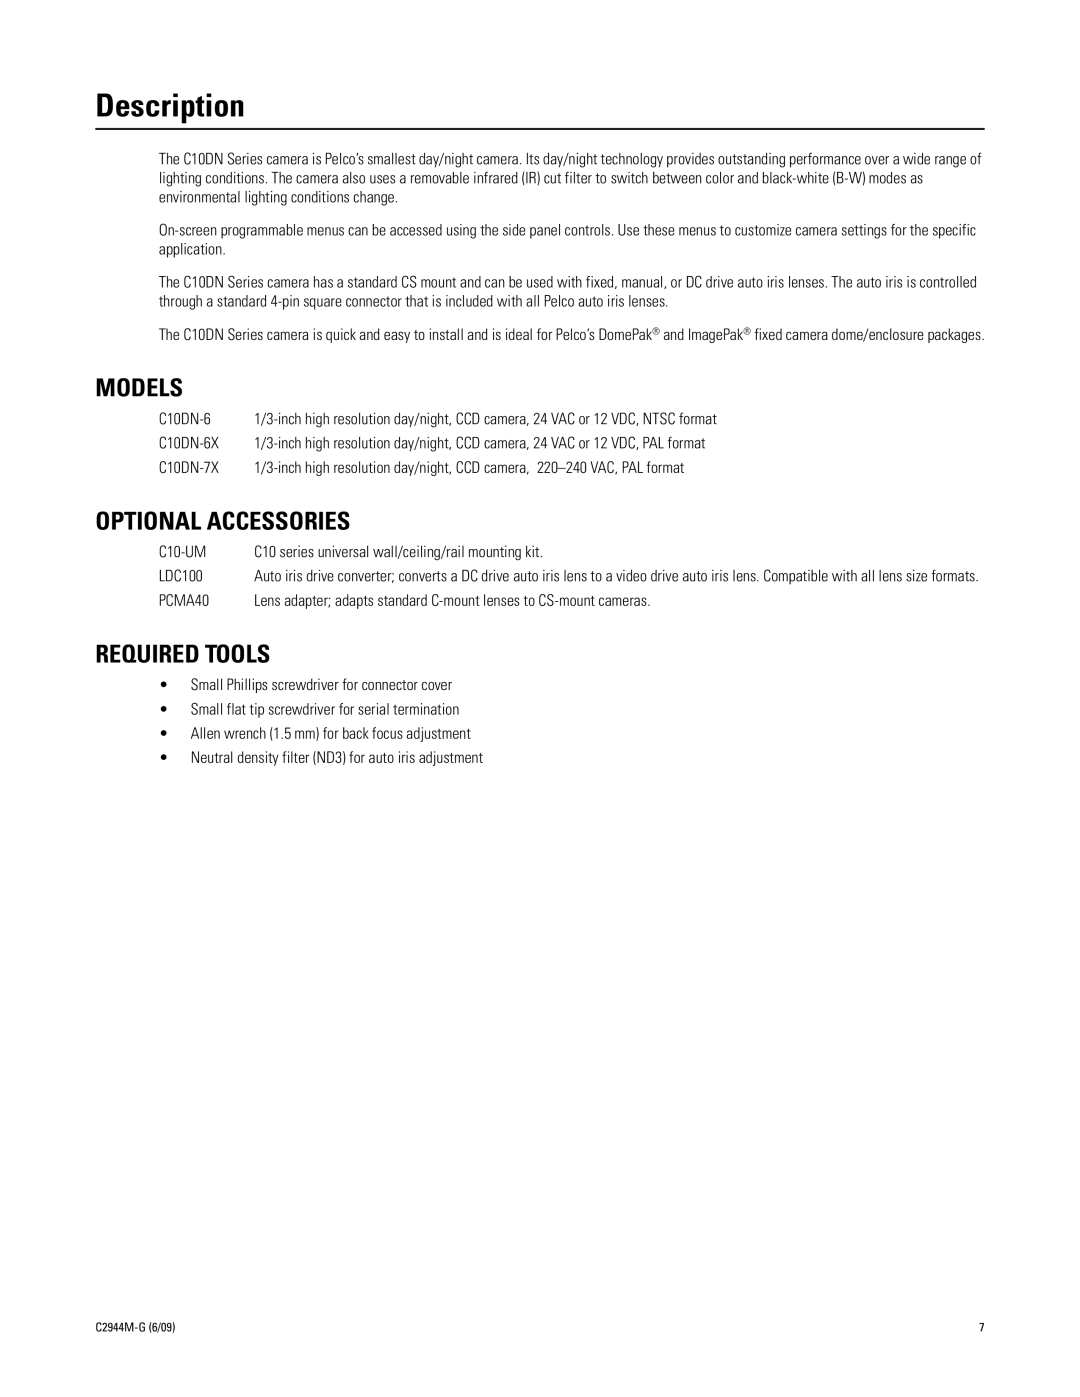 Pelco C10DN manual Description, Models, Optional Accessories, Required Tools 